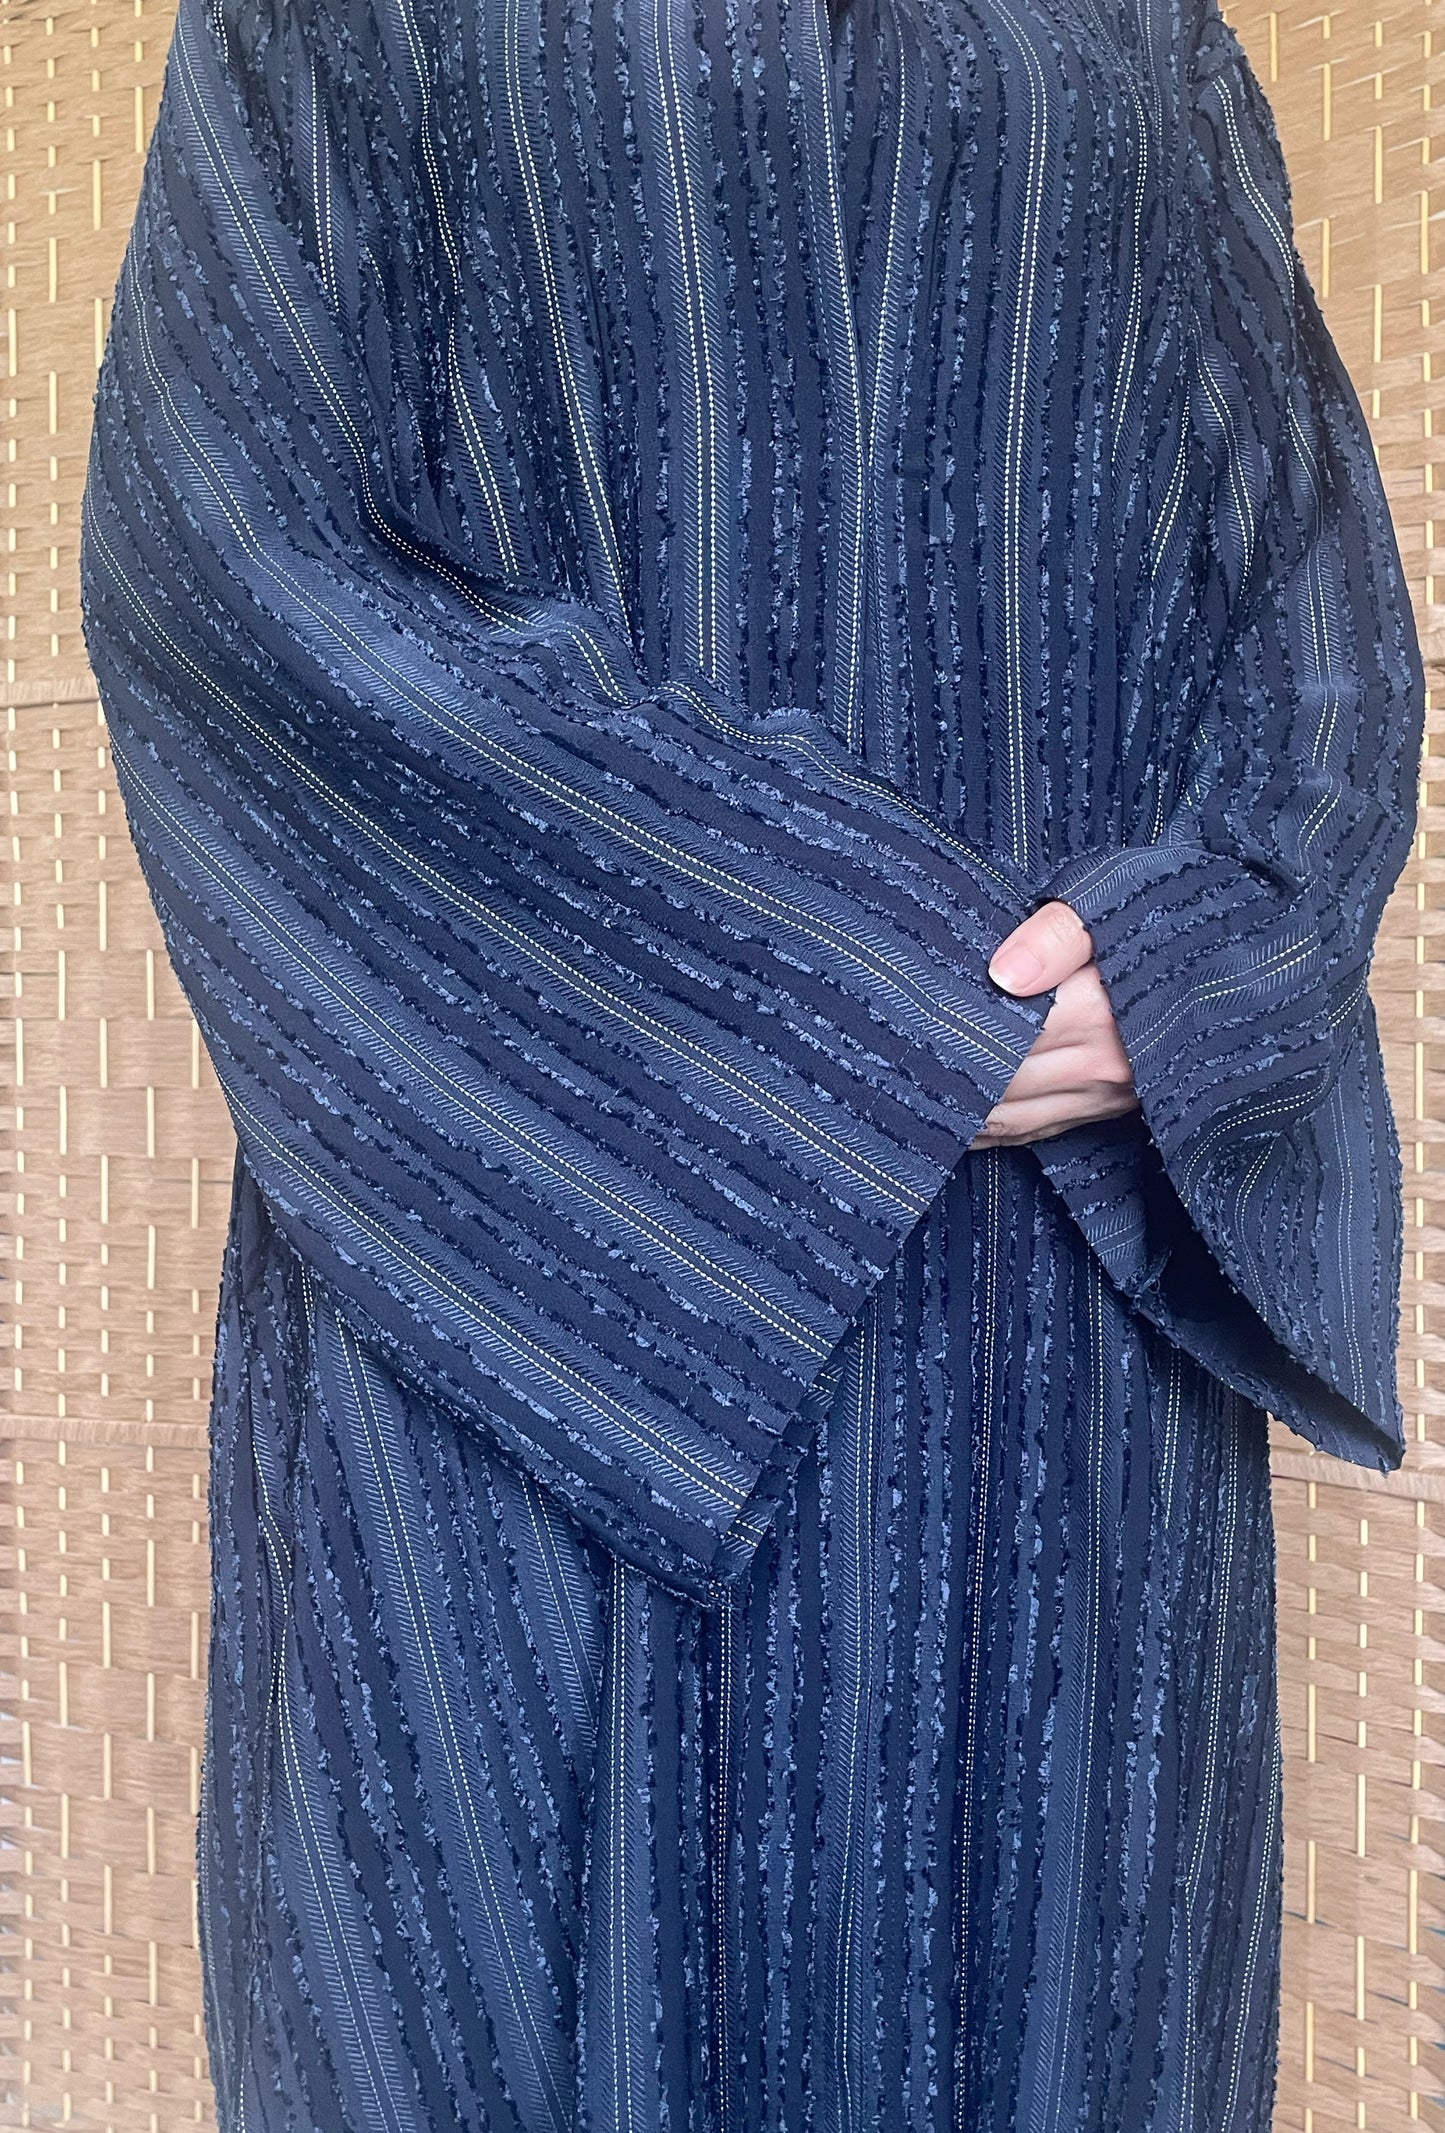 Hawa Abaya - Open Blue abaya with buttons and matching scarf